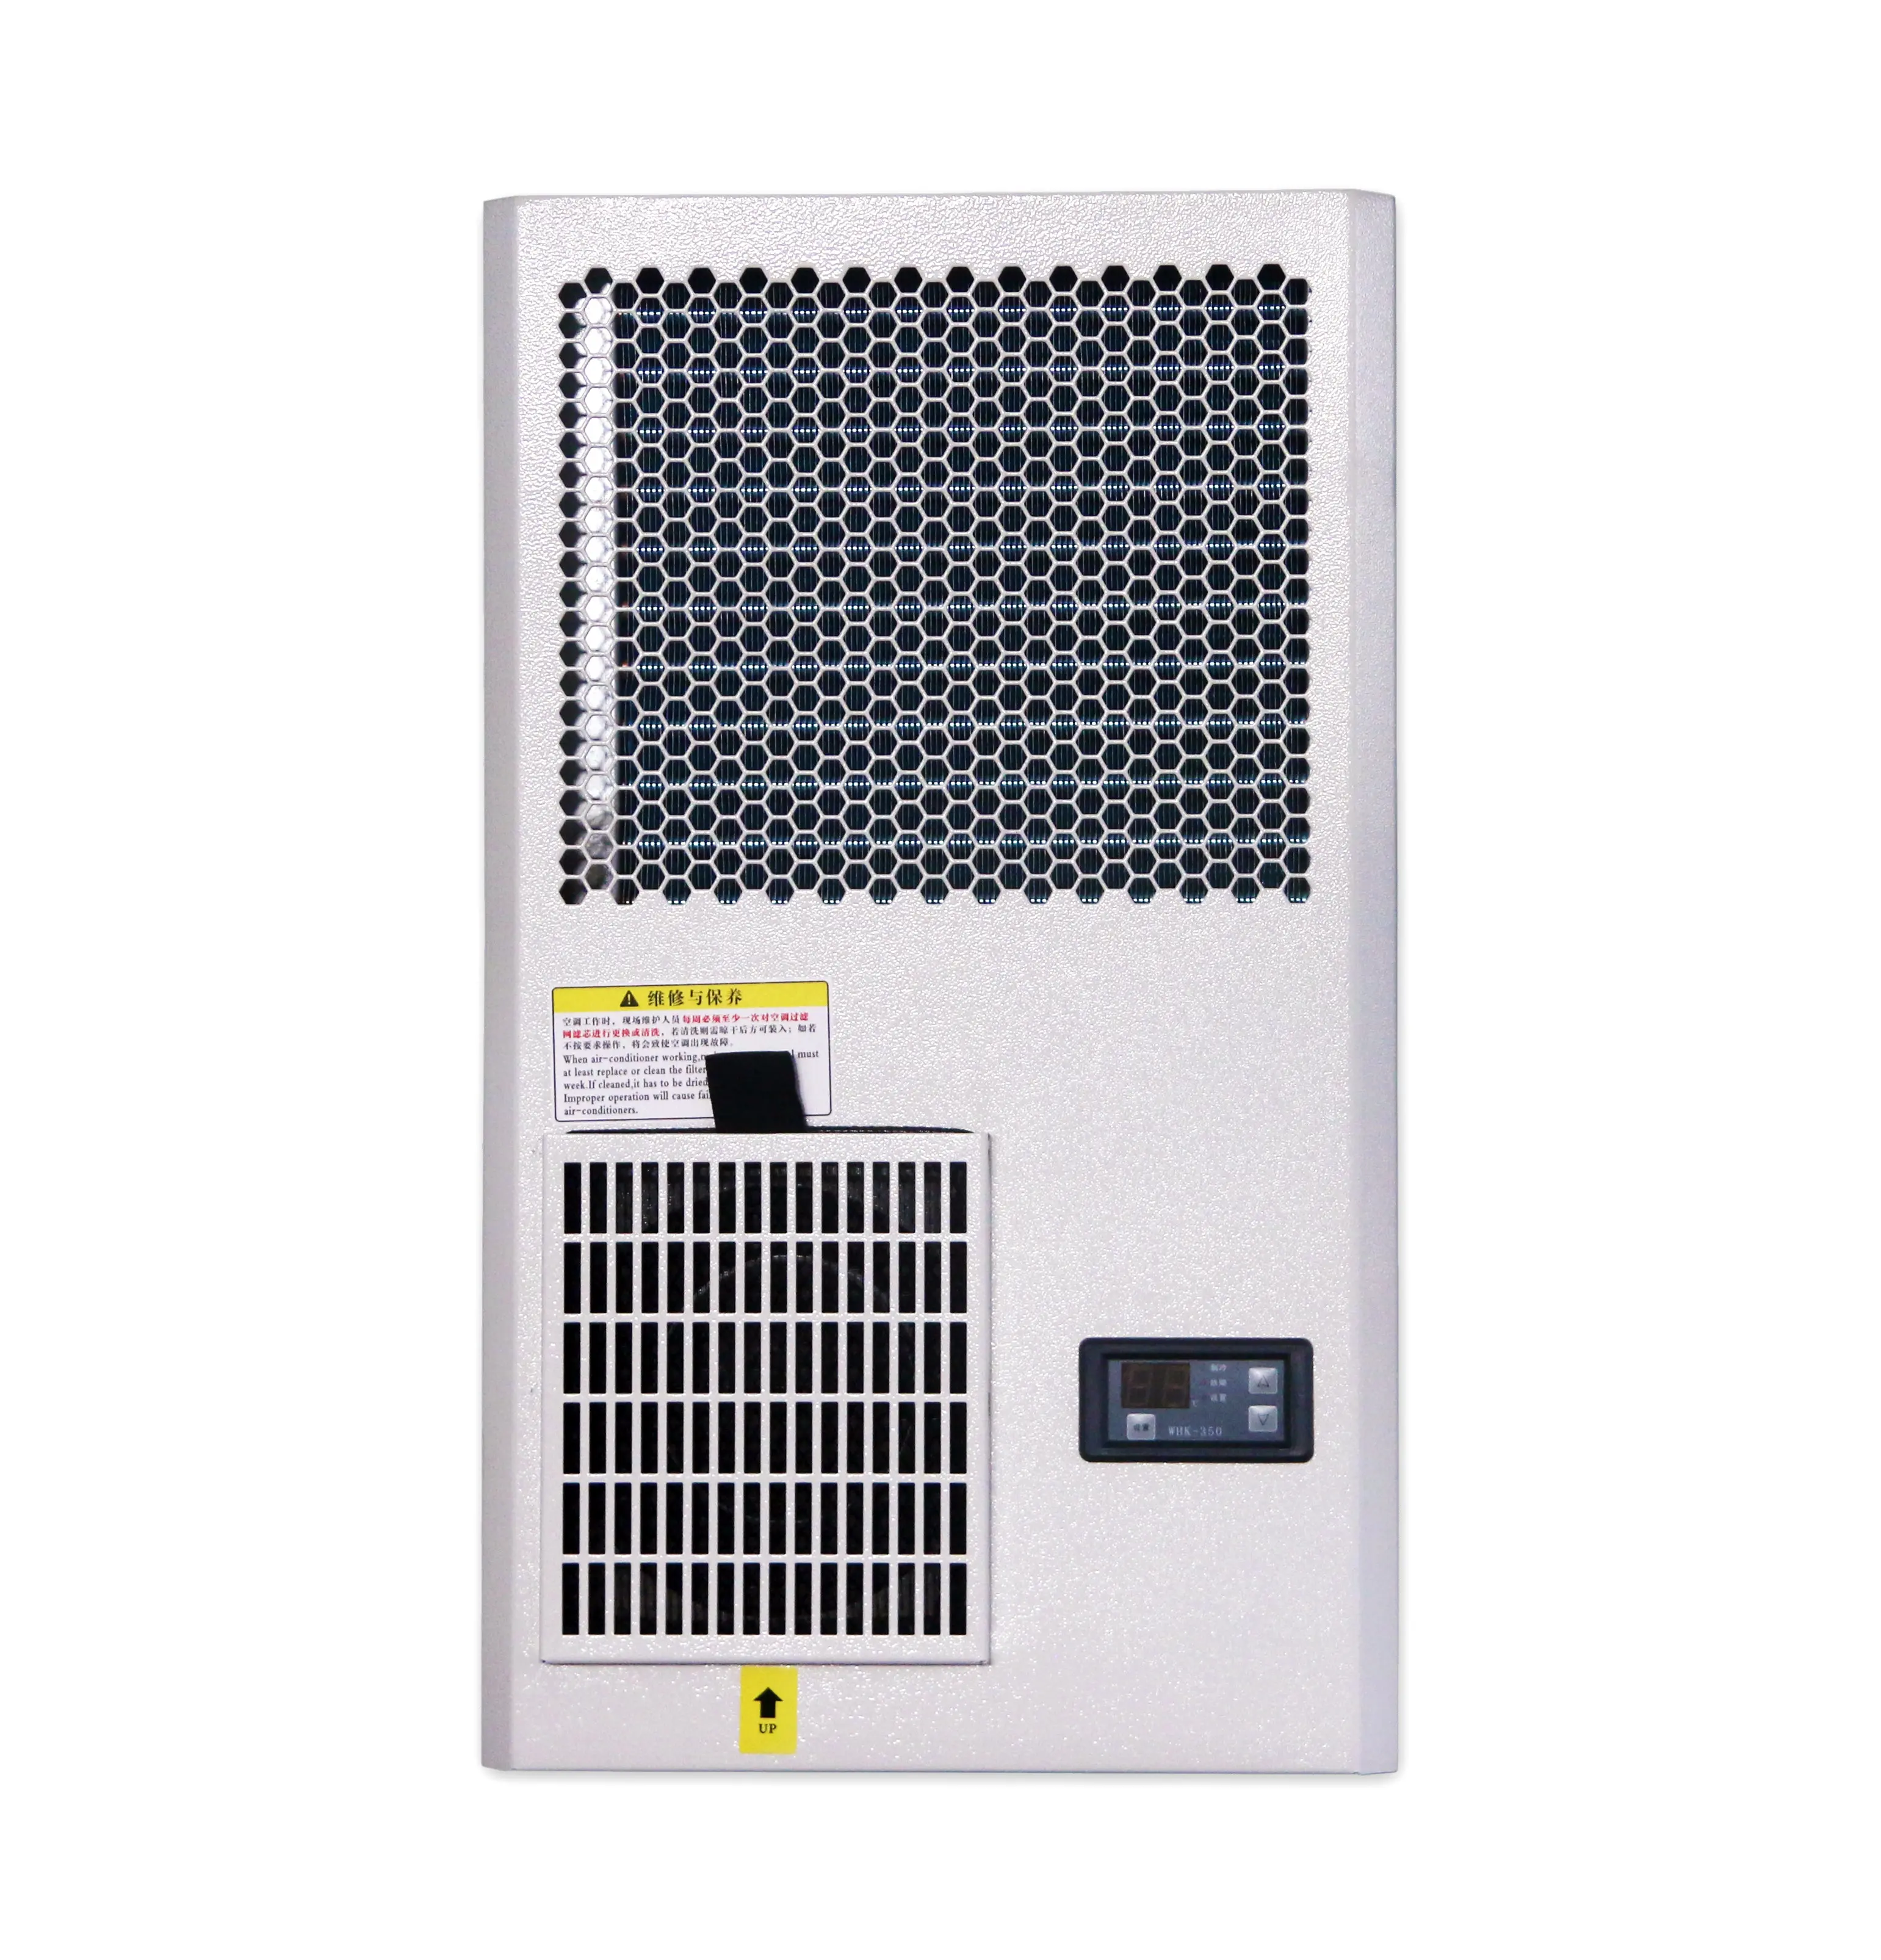 No Condensed Water cabinet Air Conditioner foe cnc machine 300W (EA-350W)